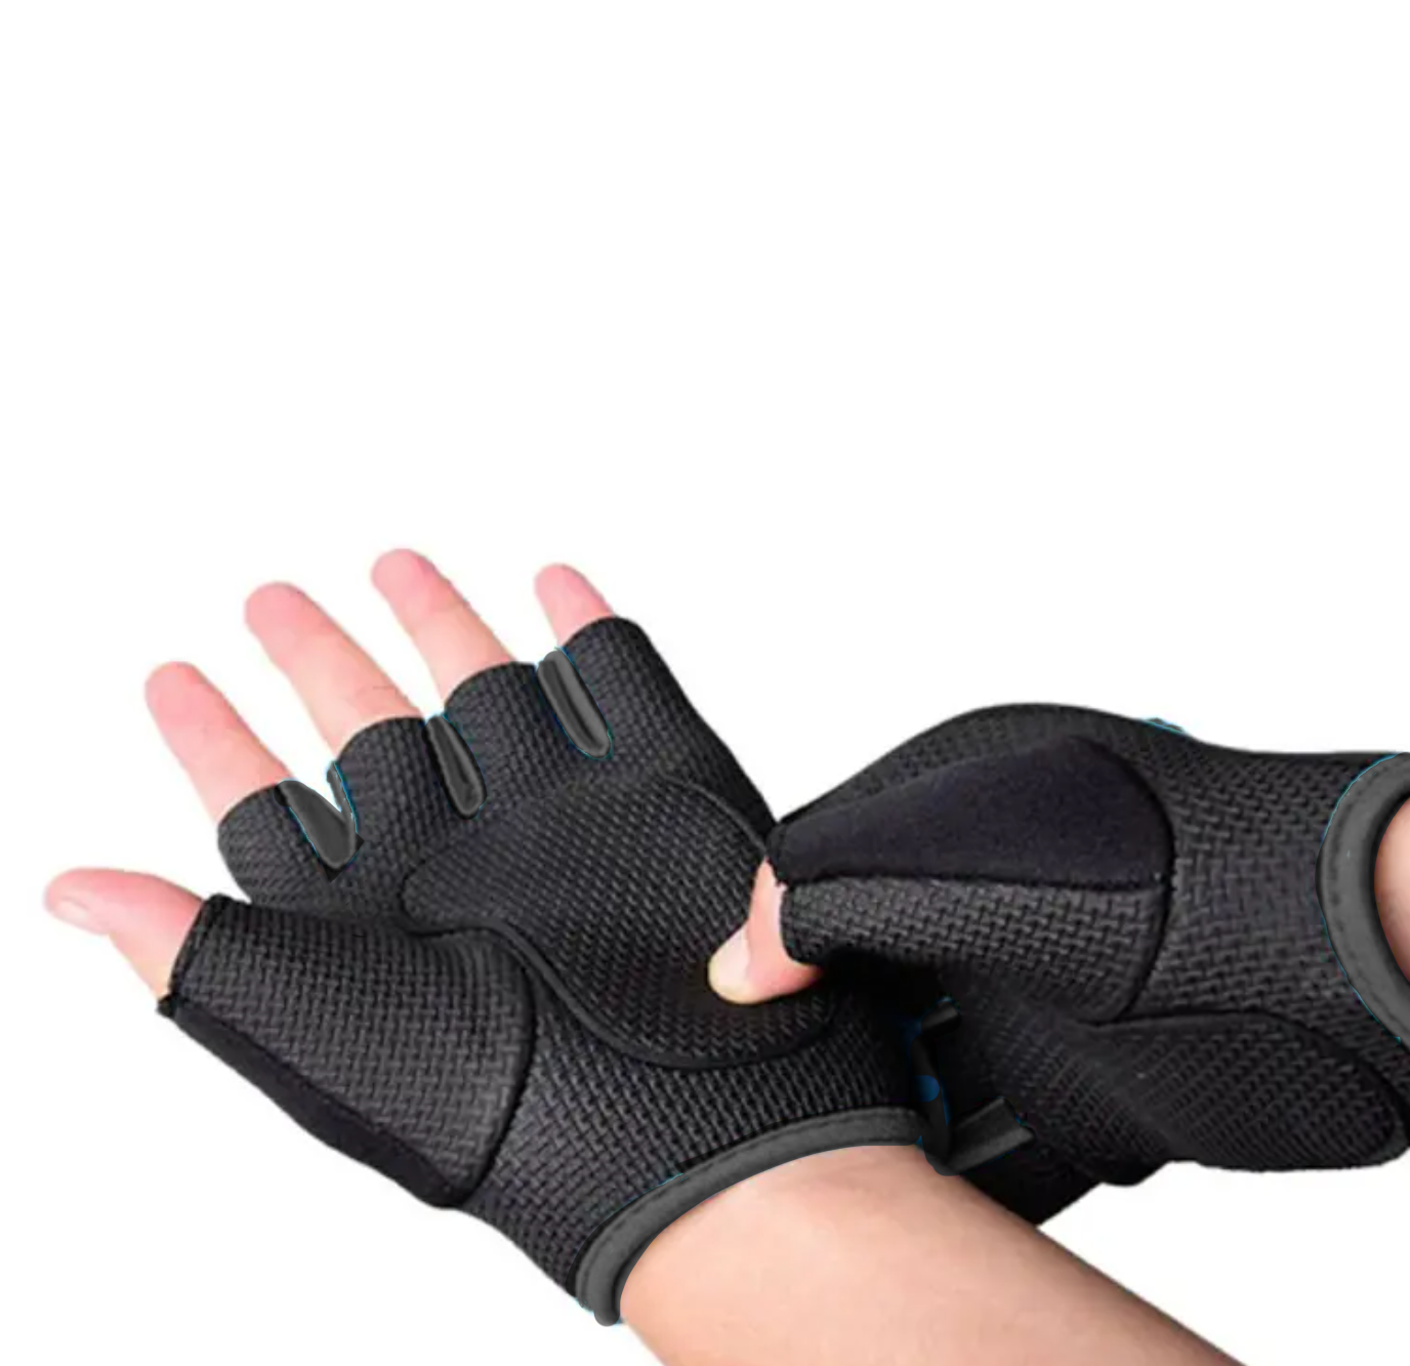 Gym training gloves